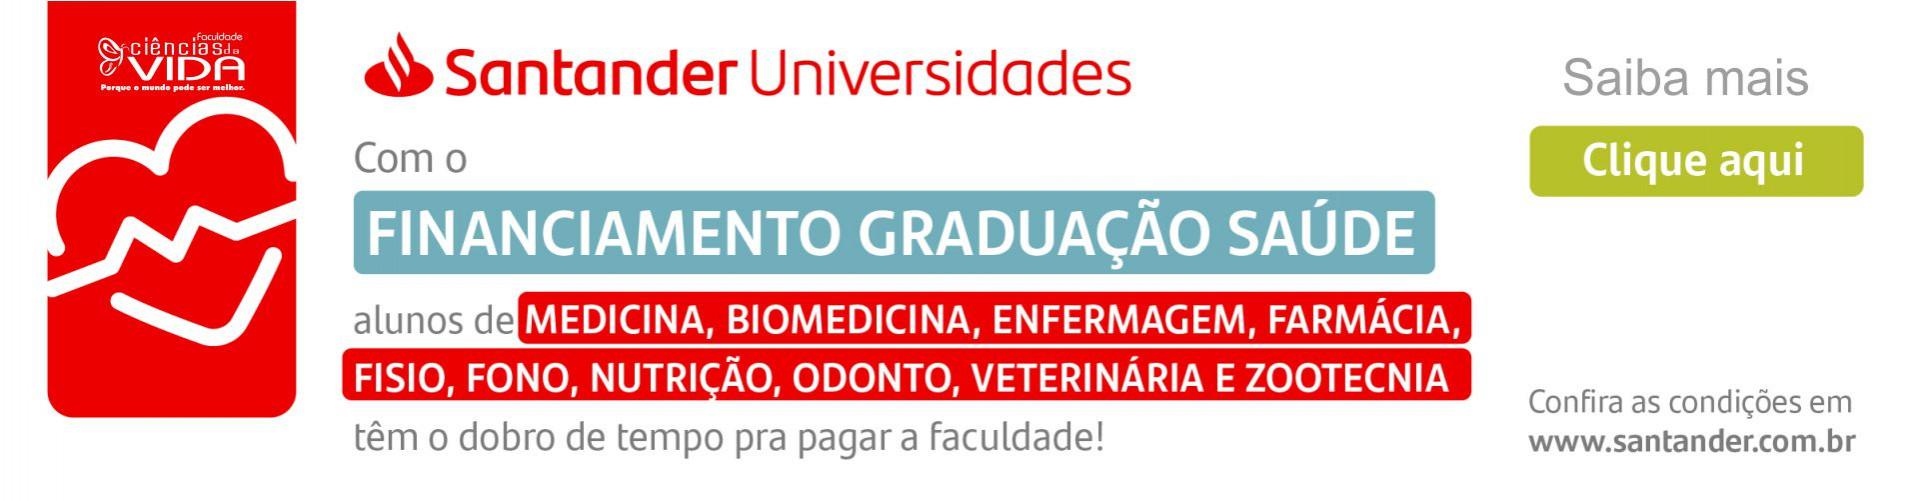 Financiamento estudantil Santander